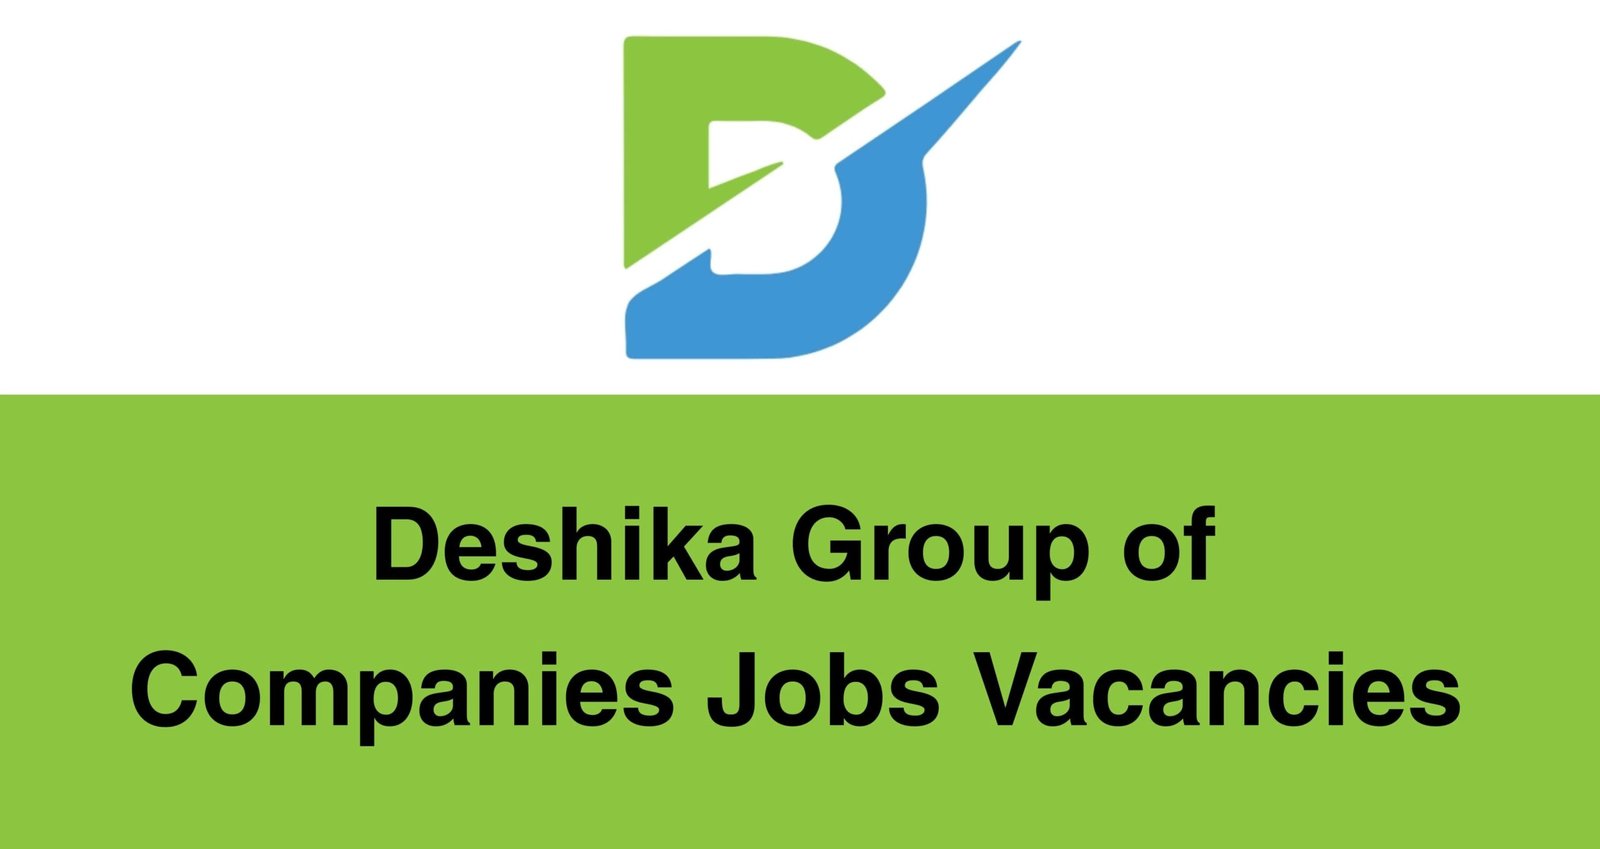 Deshika Group of Companies Jobs Vacancies